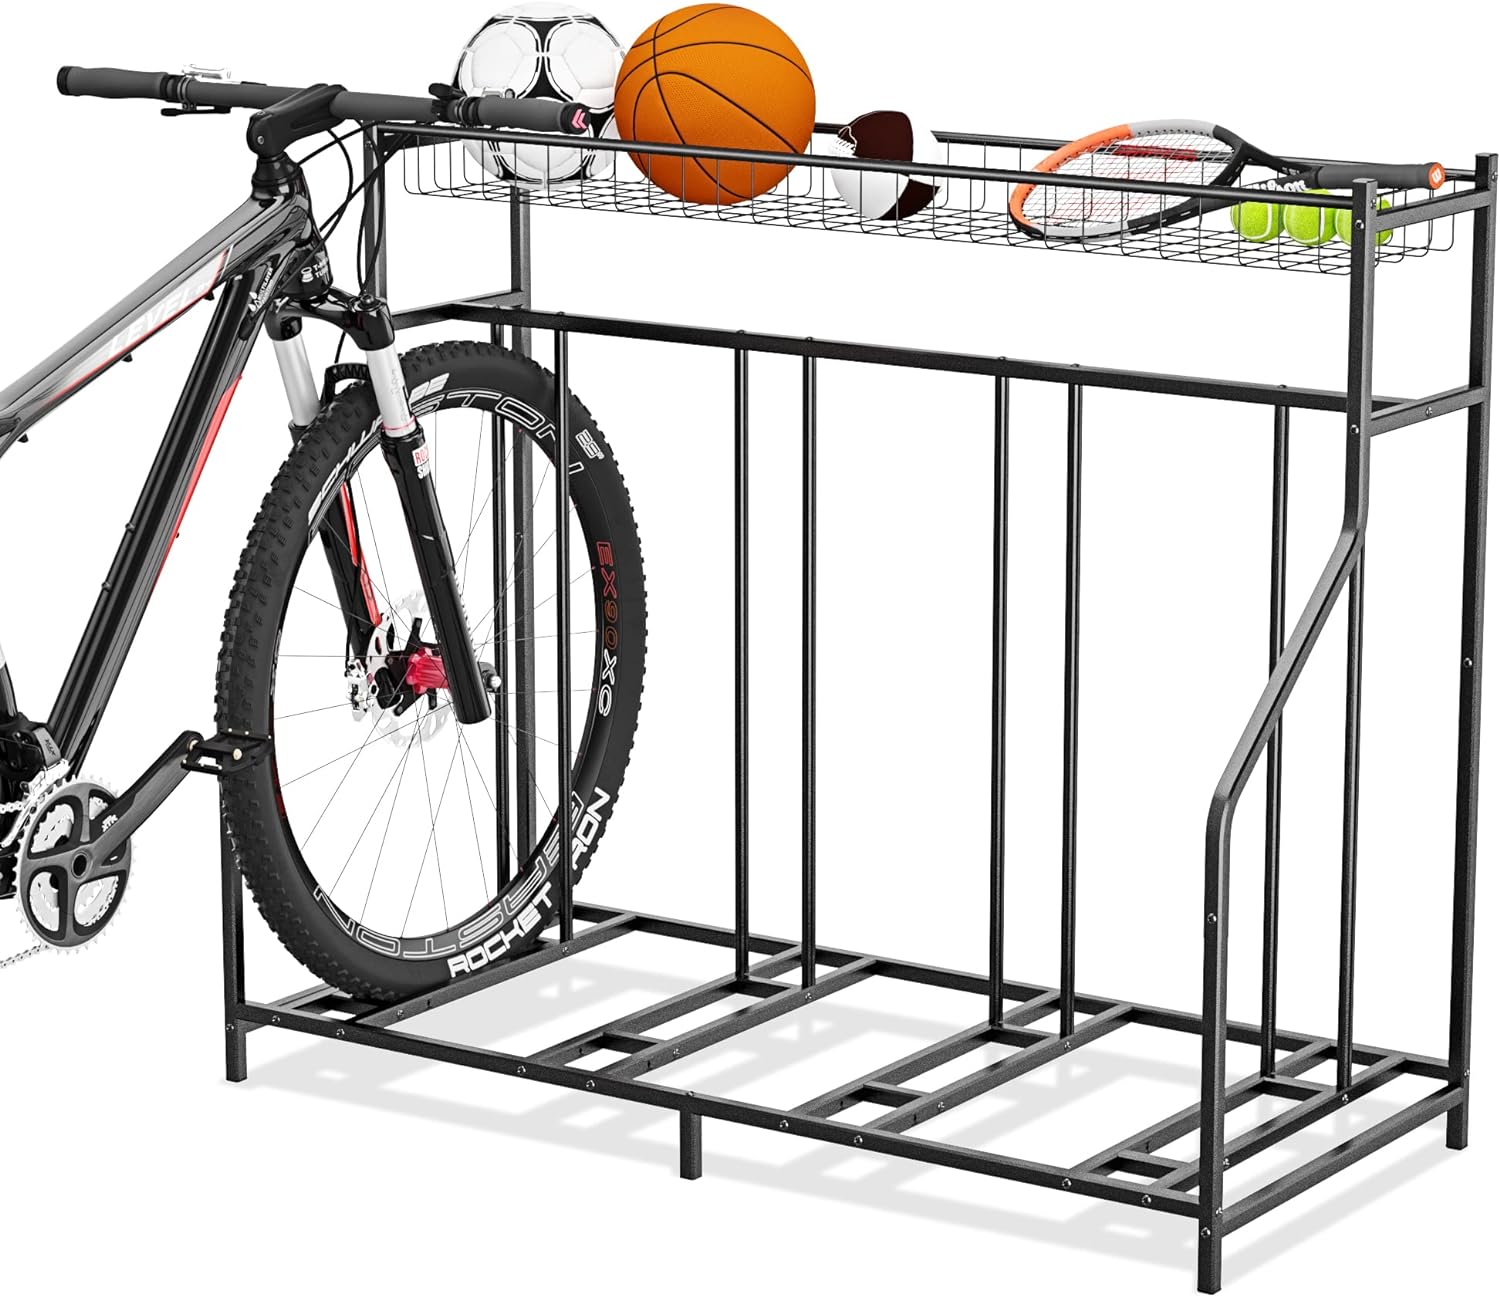 Gadroad 4 Bike Rack Garage with Storage Basket for Mountain/Kids Bike, Black - $60